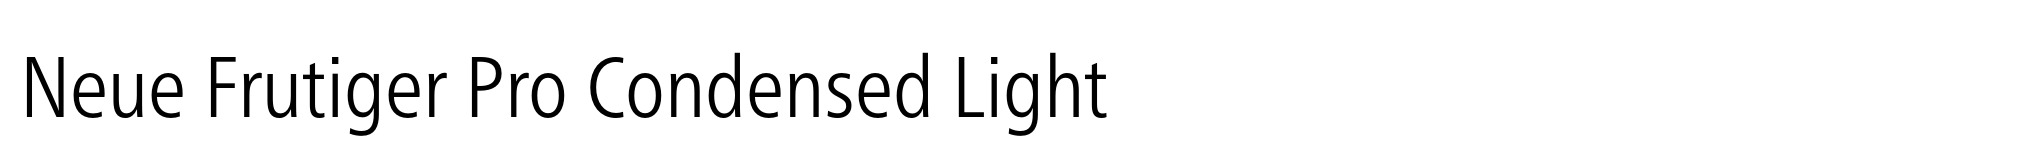 Neue Frutiger Pro Condensed Light image